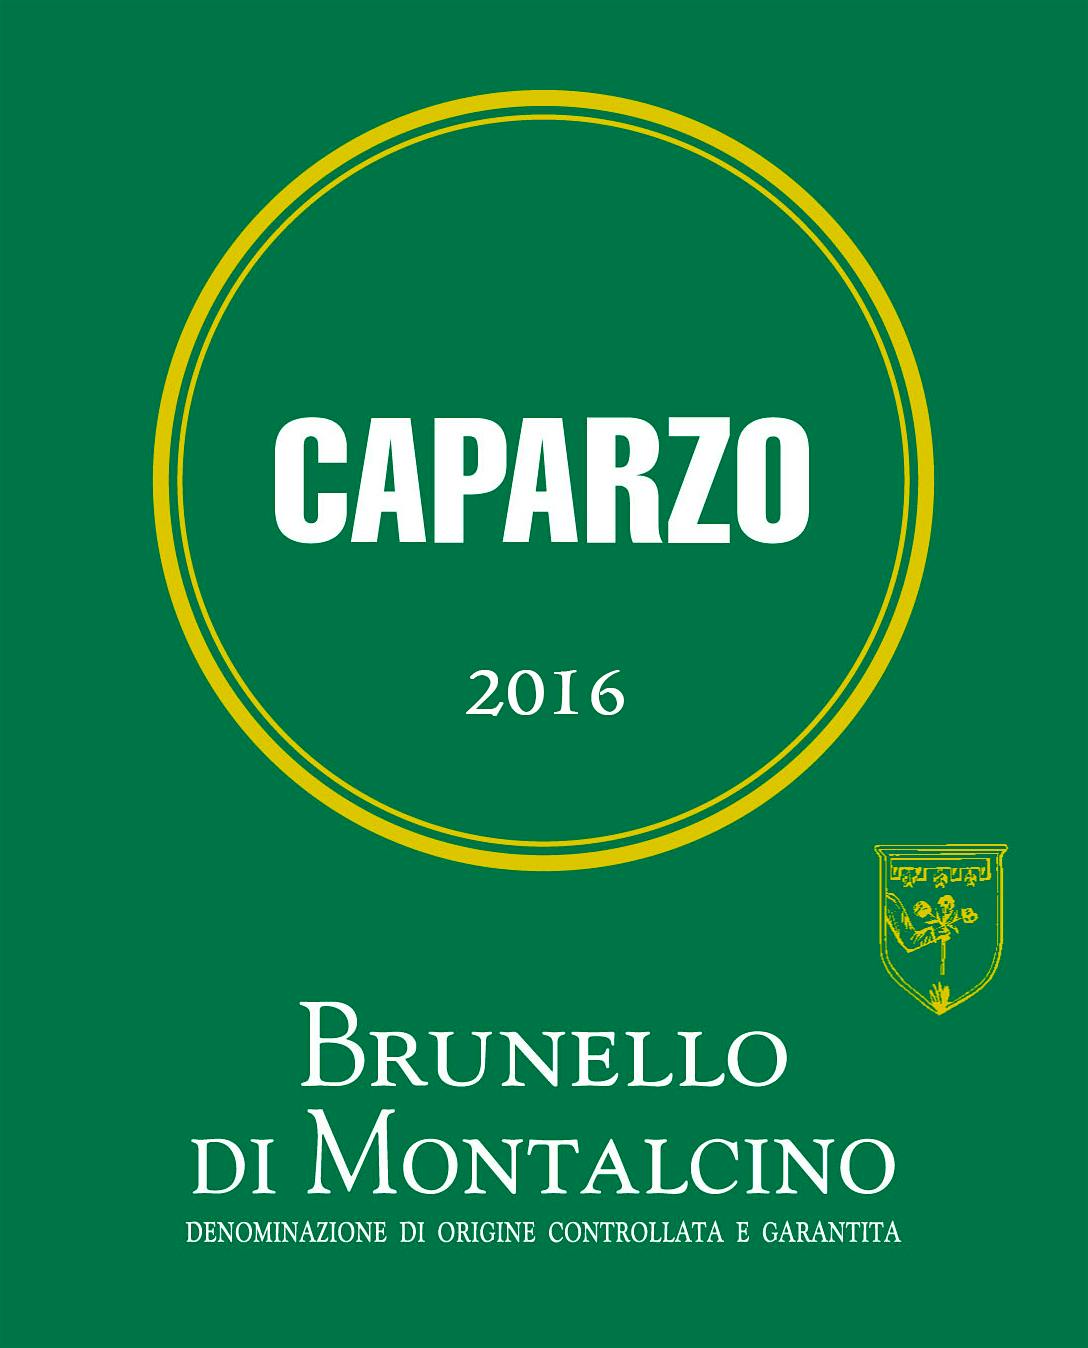 Label for Caparzo